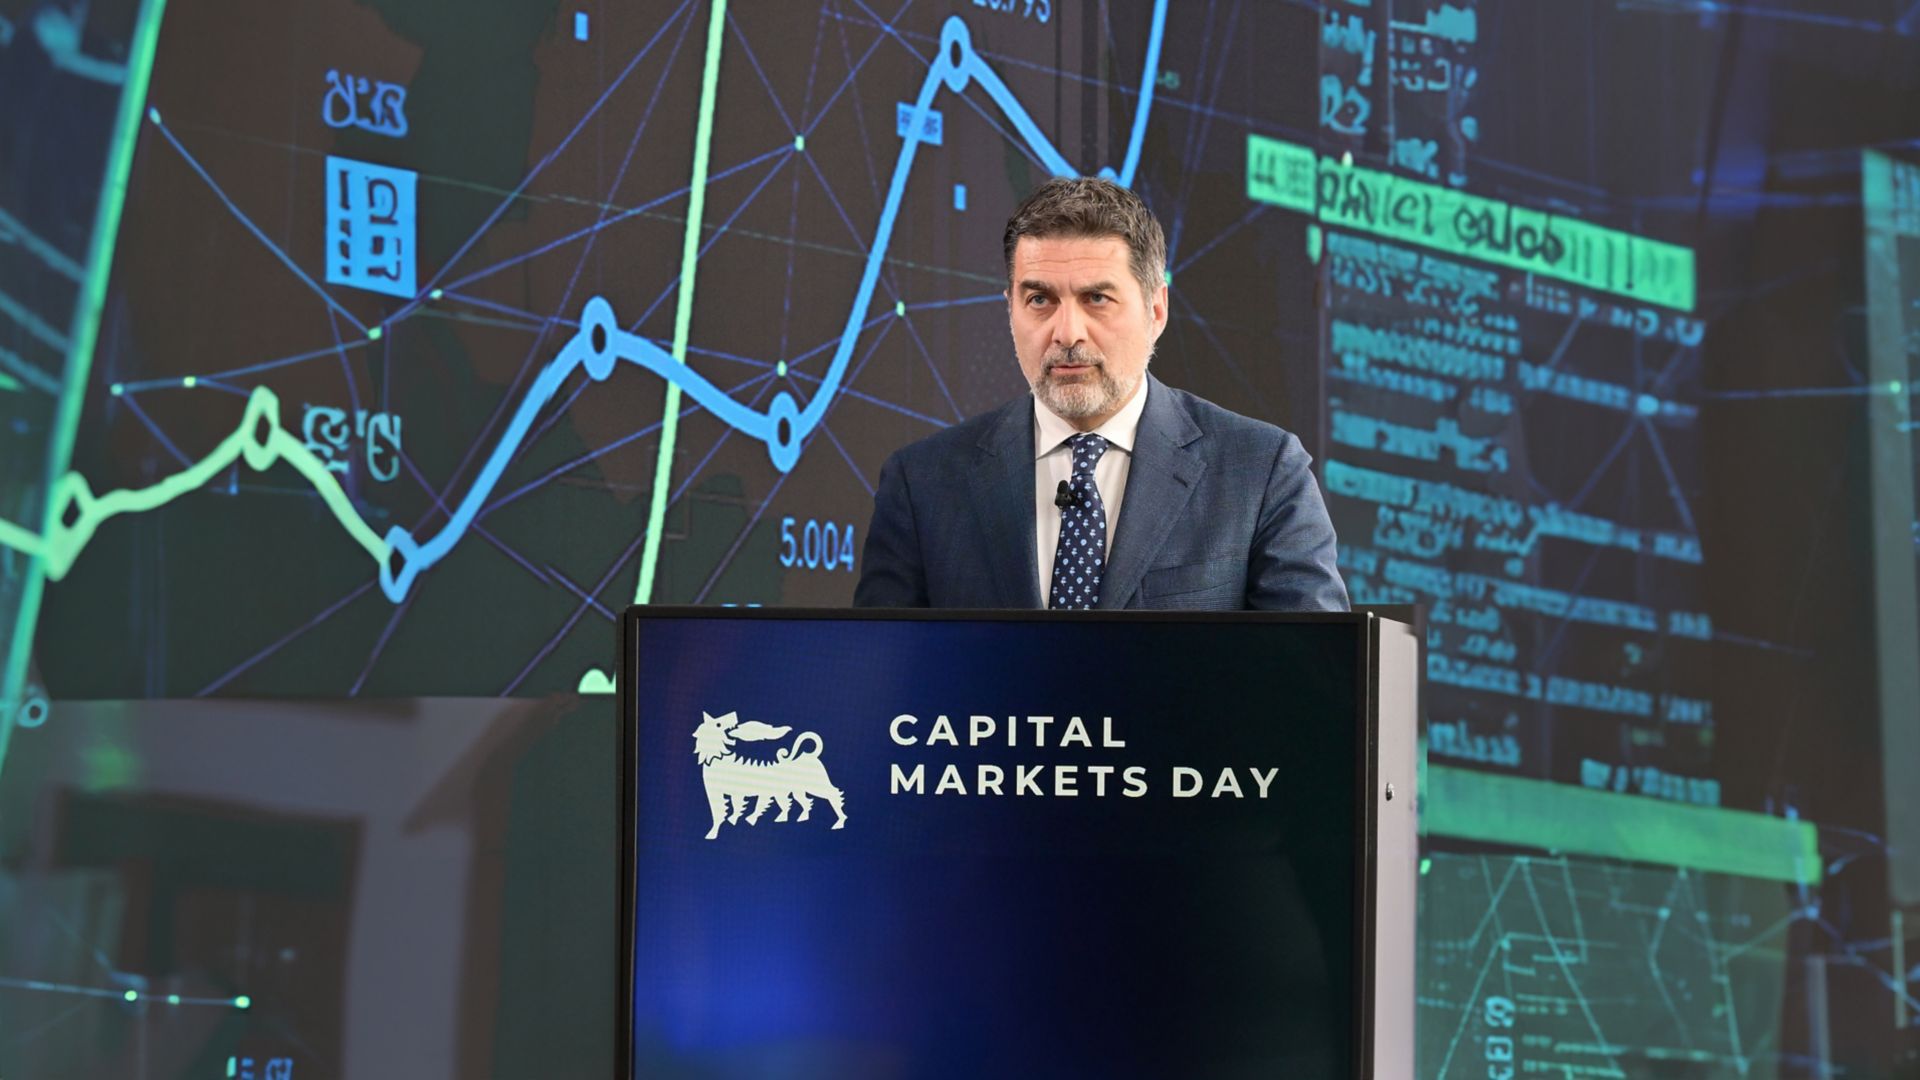 ENI Capital Markets Day